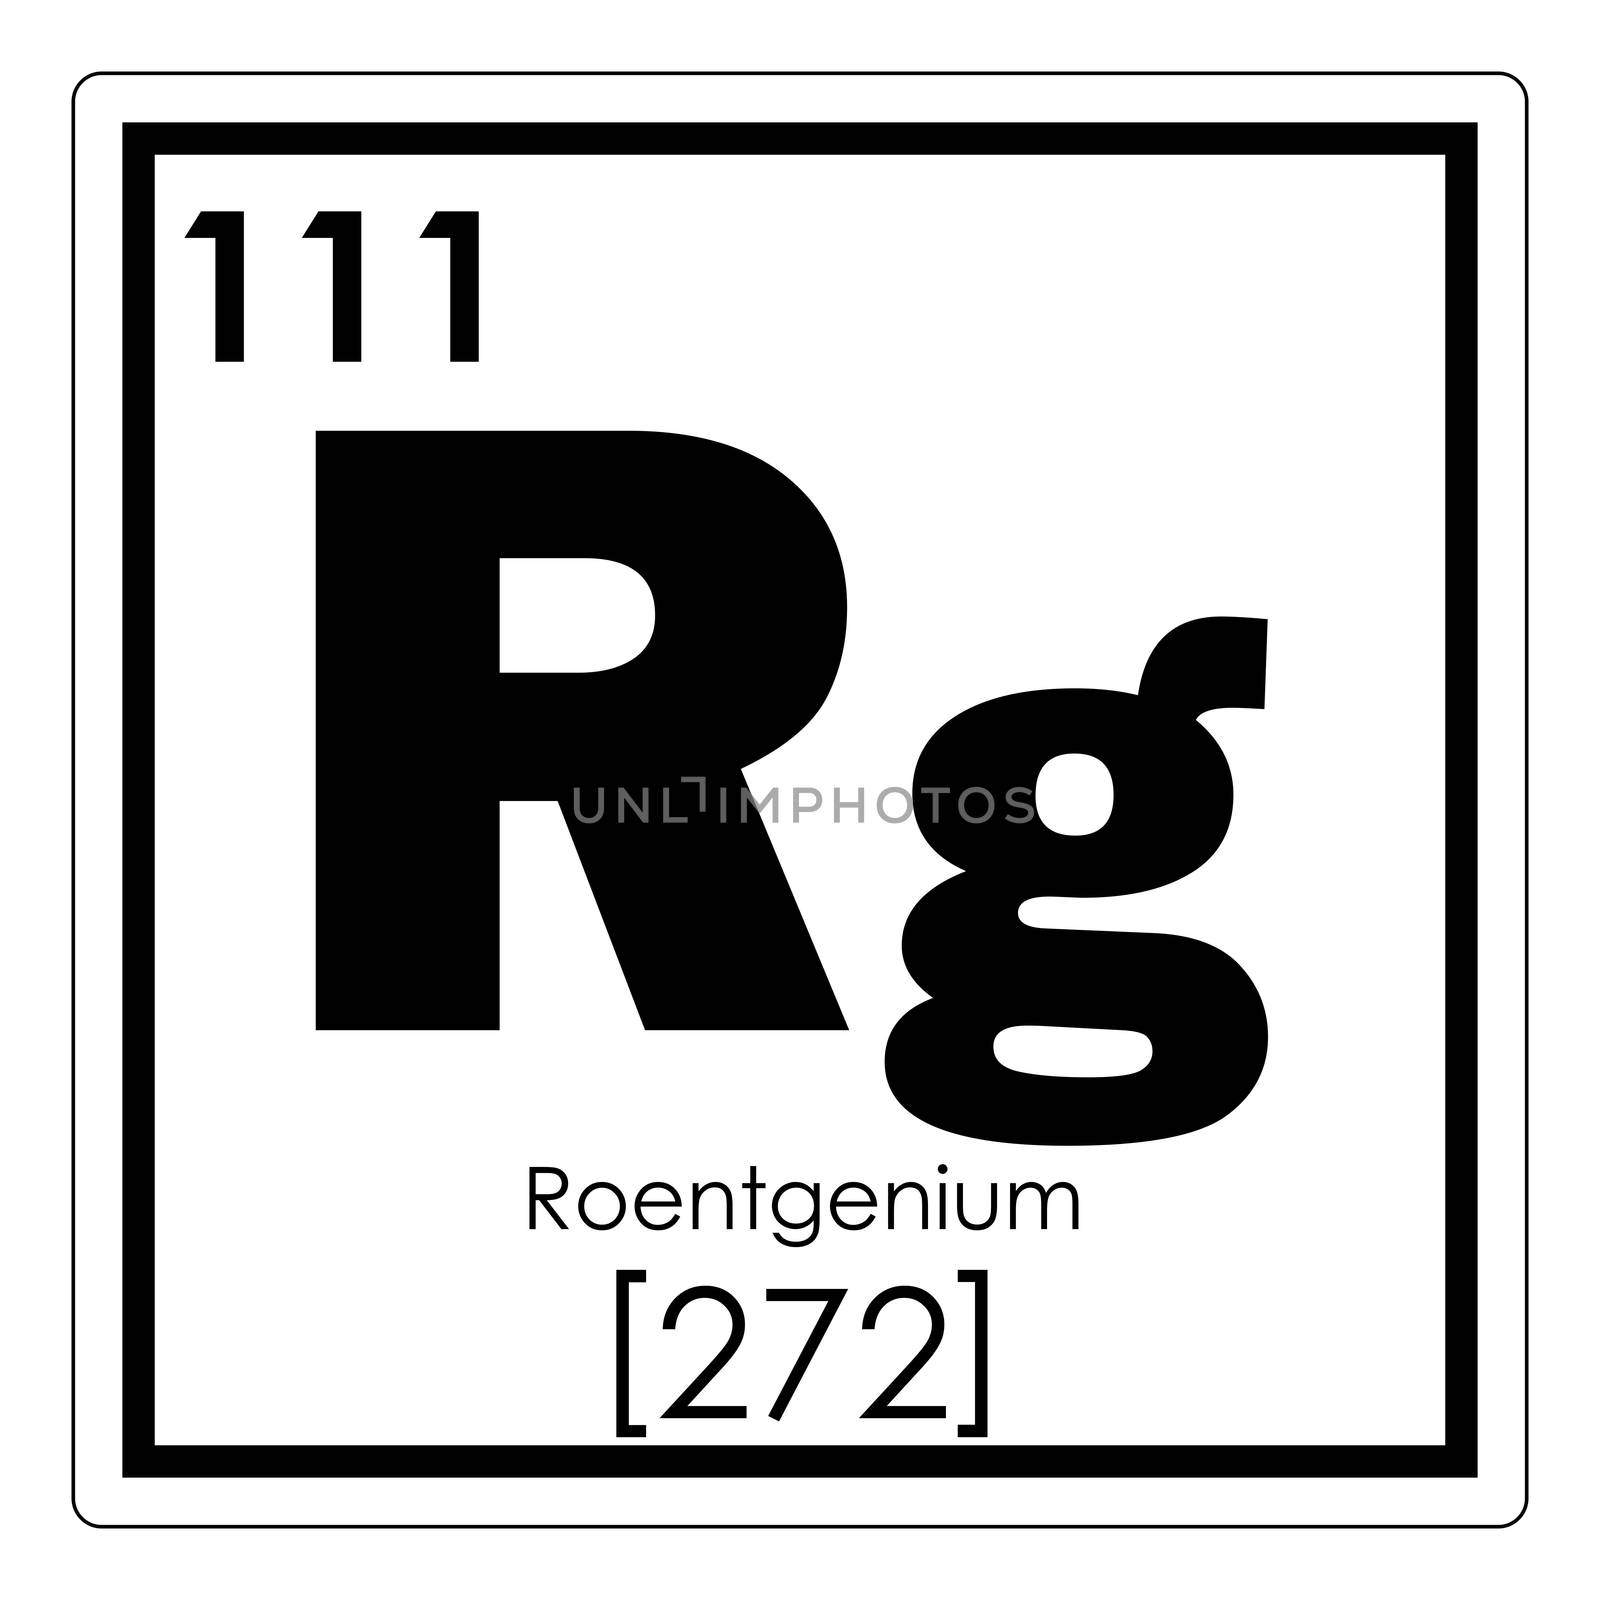 Roentgenium chemical element by tony4urban